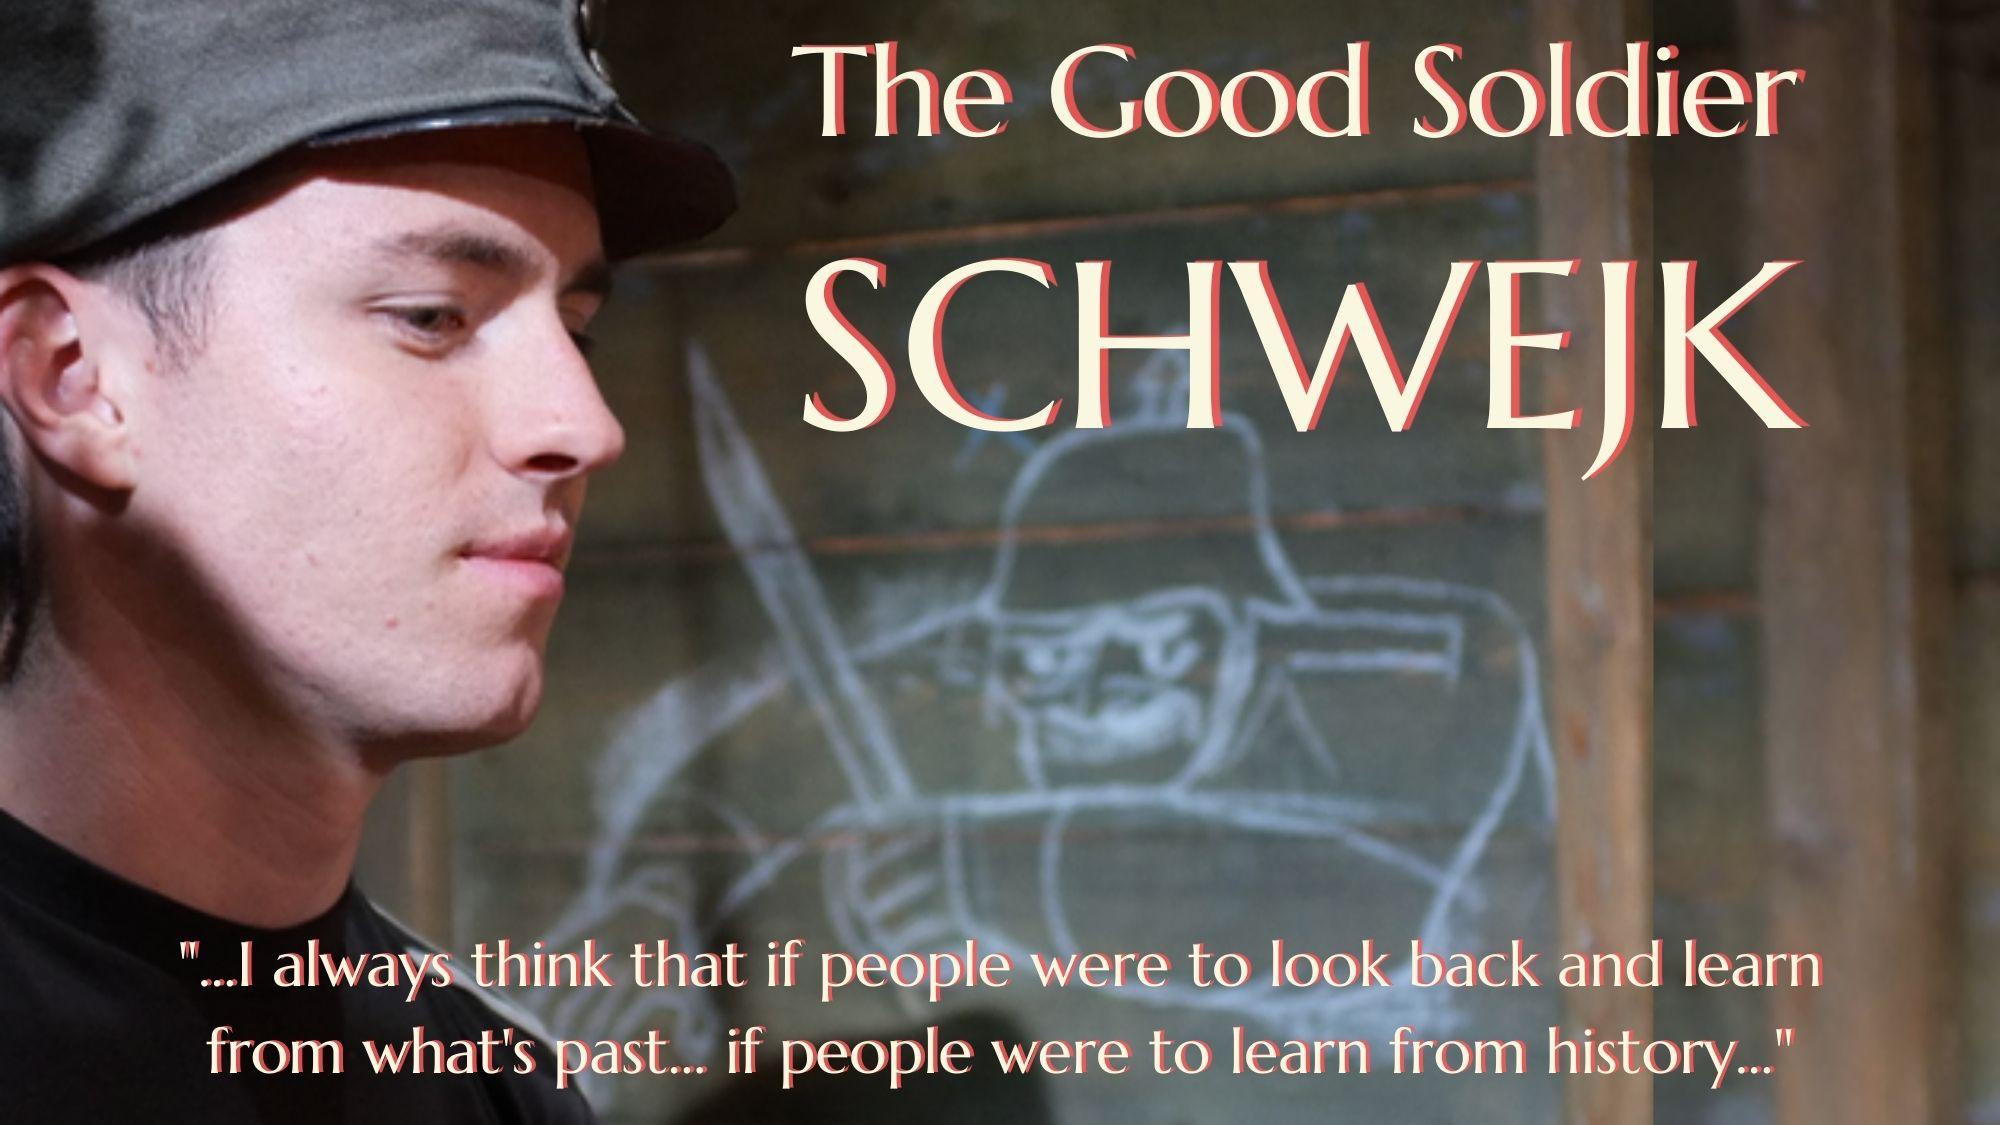 The Good Soldier Schwejk (Online presentation)